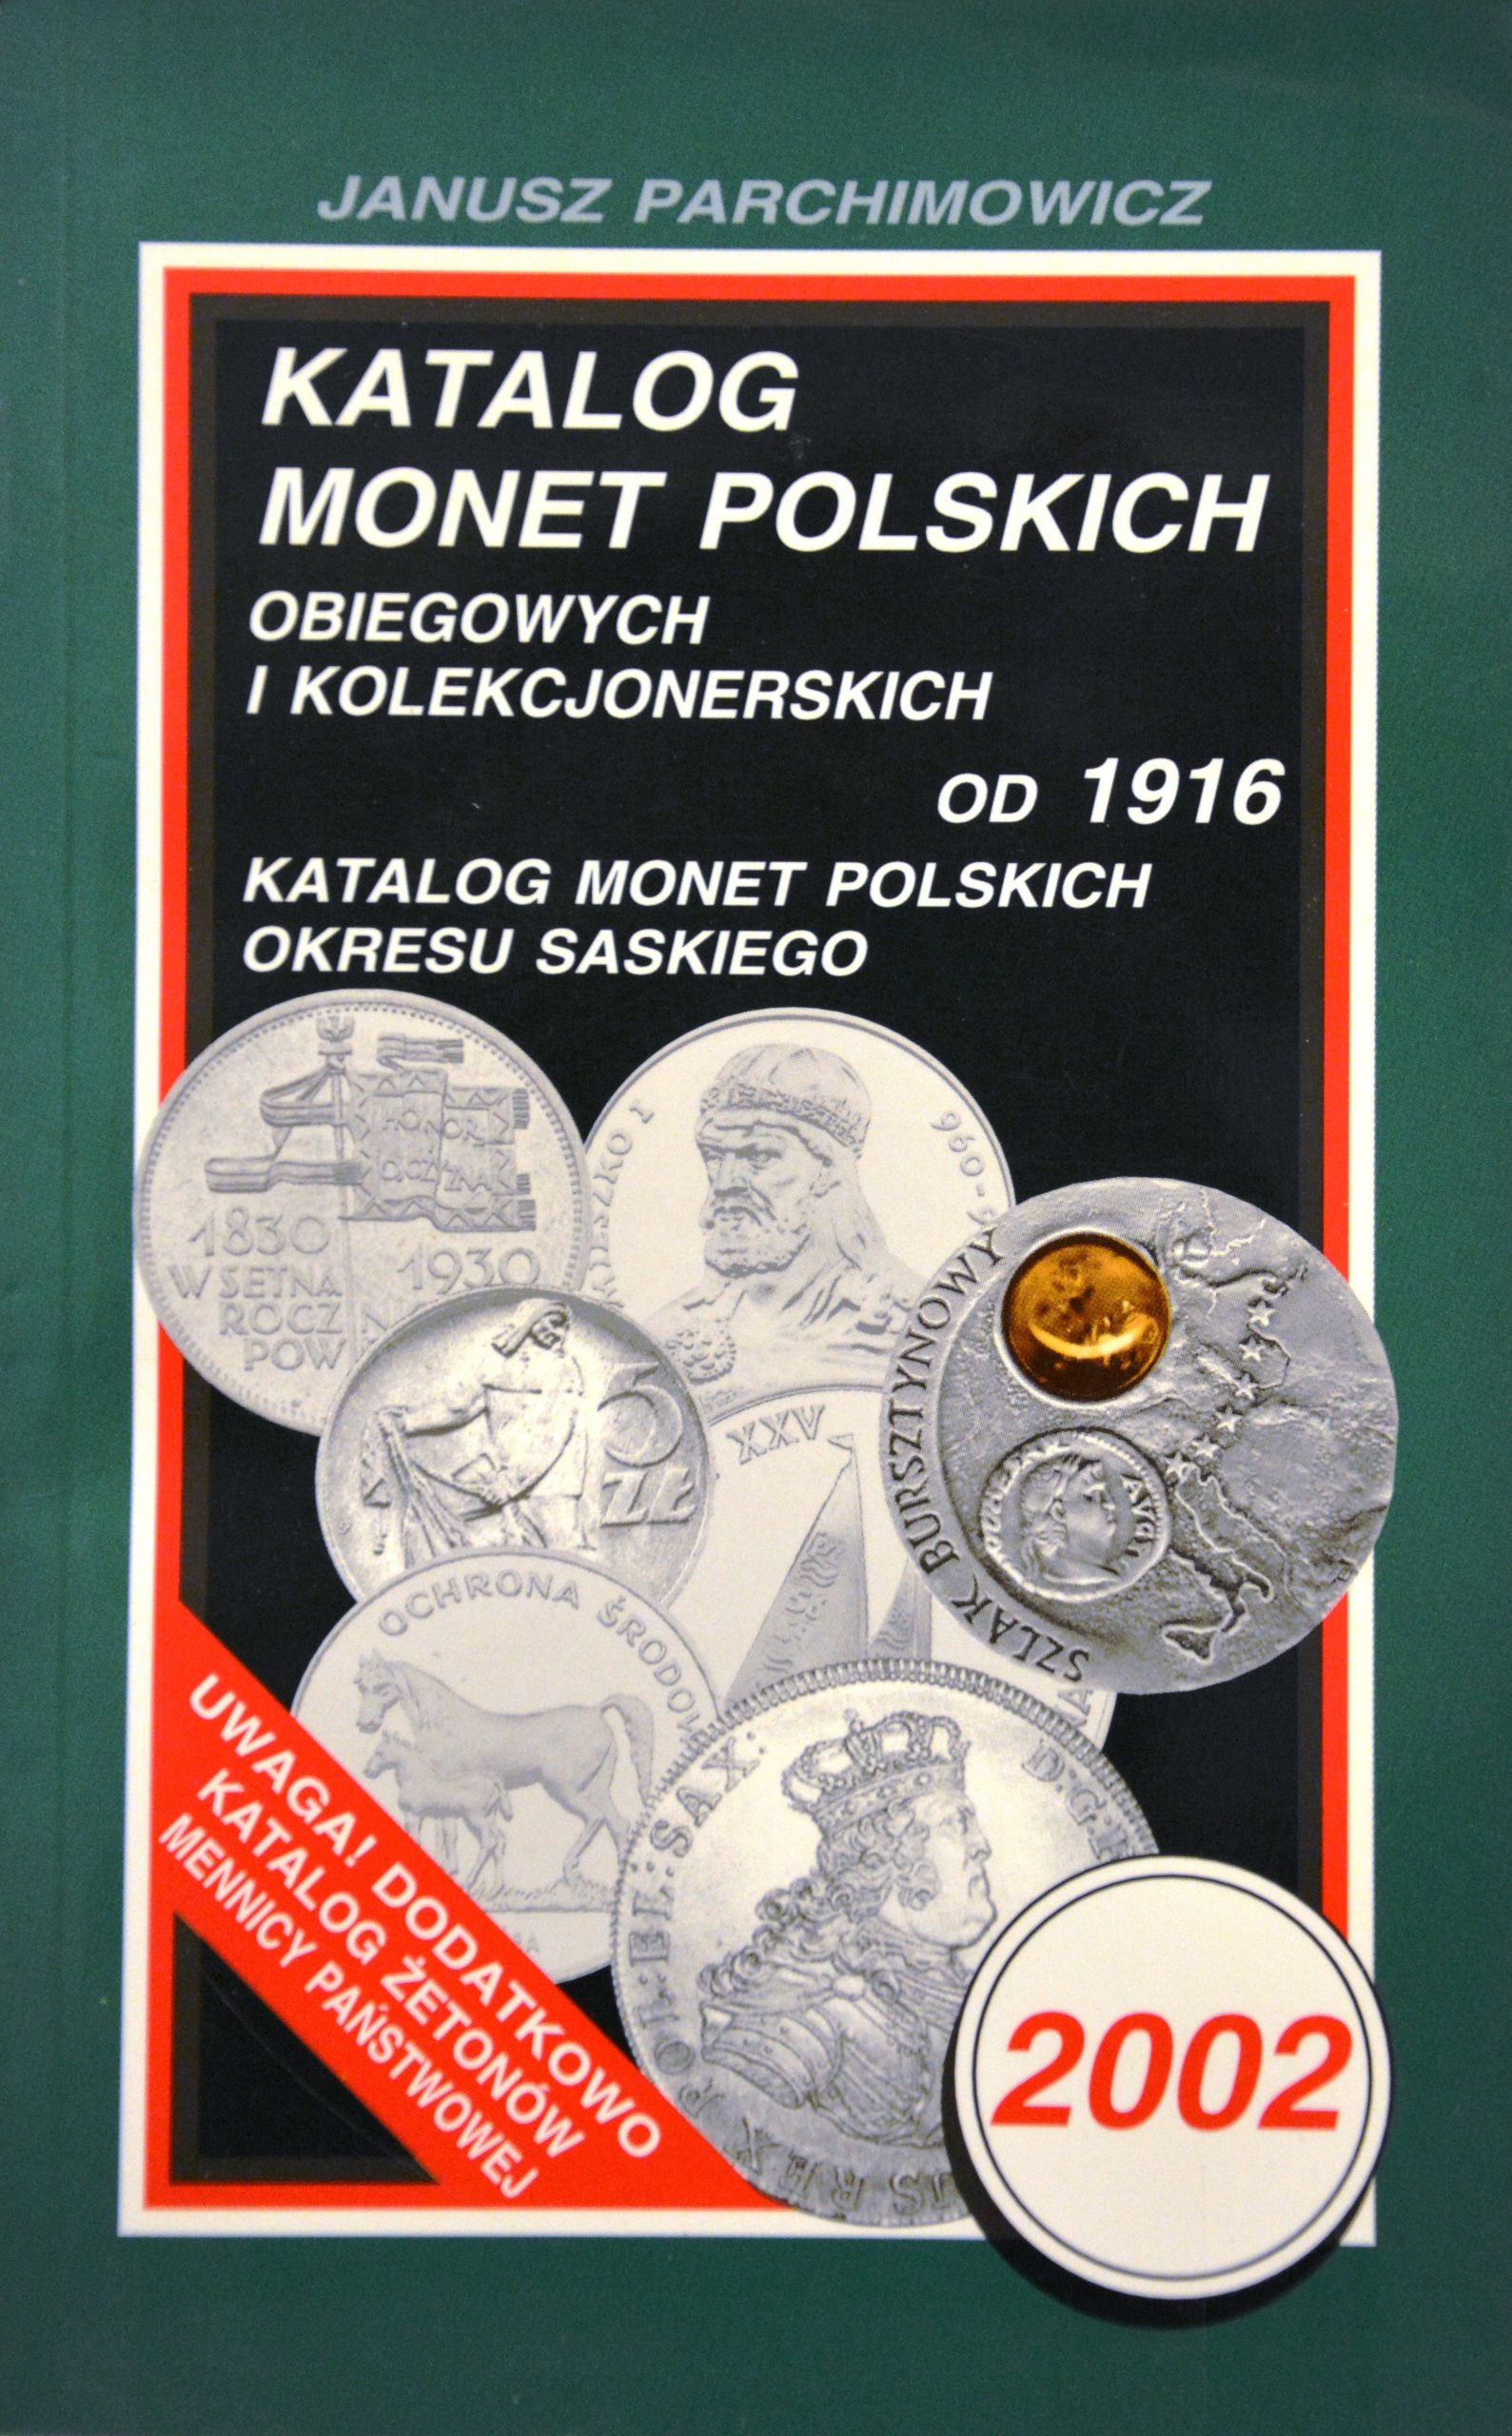 Parchimowicz Katalog monet polskich 2002 